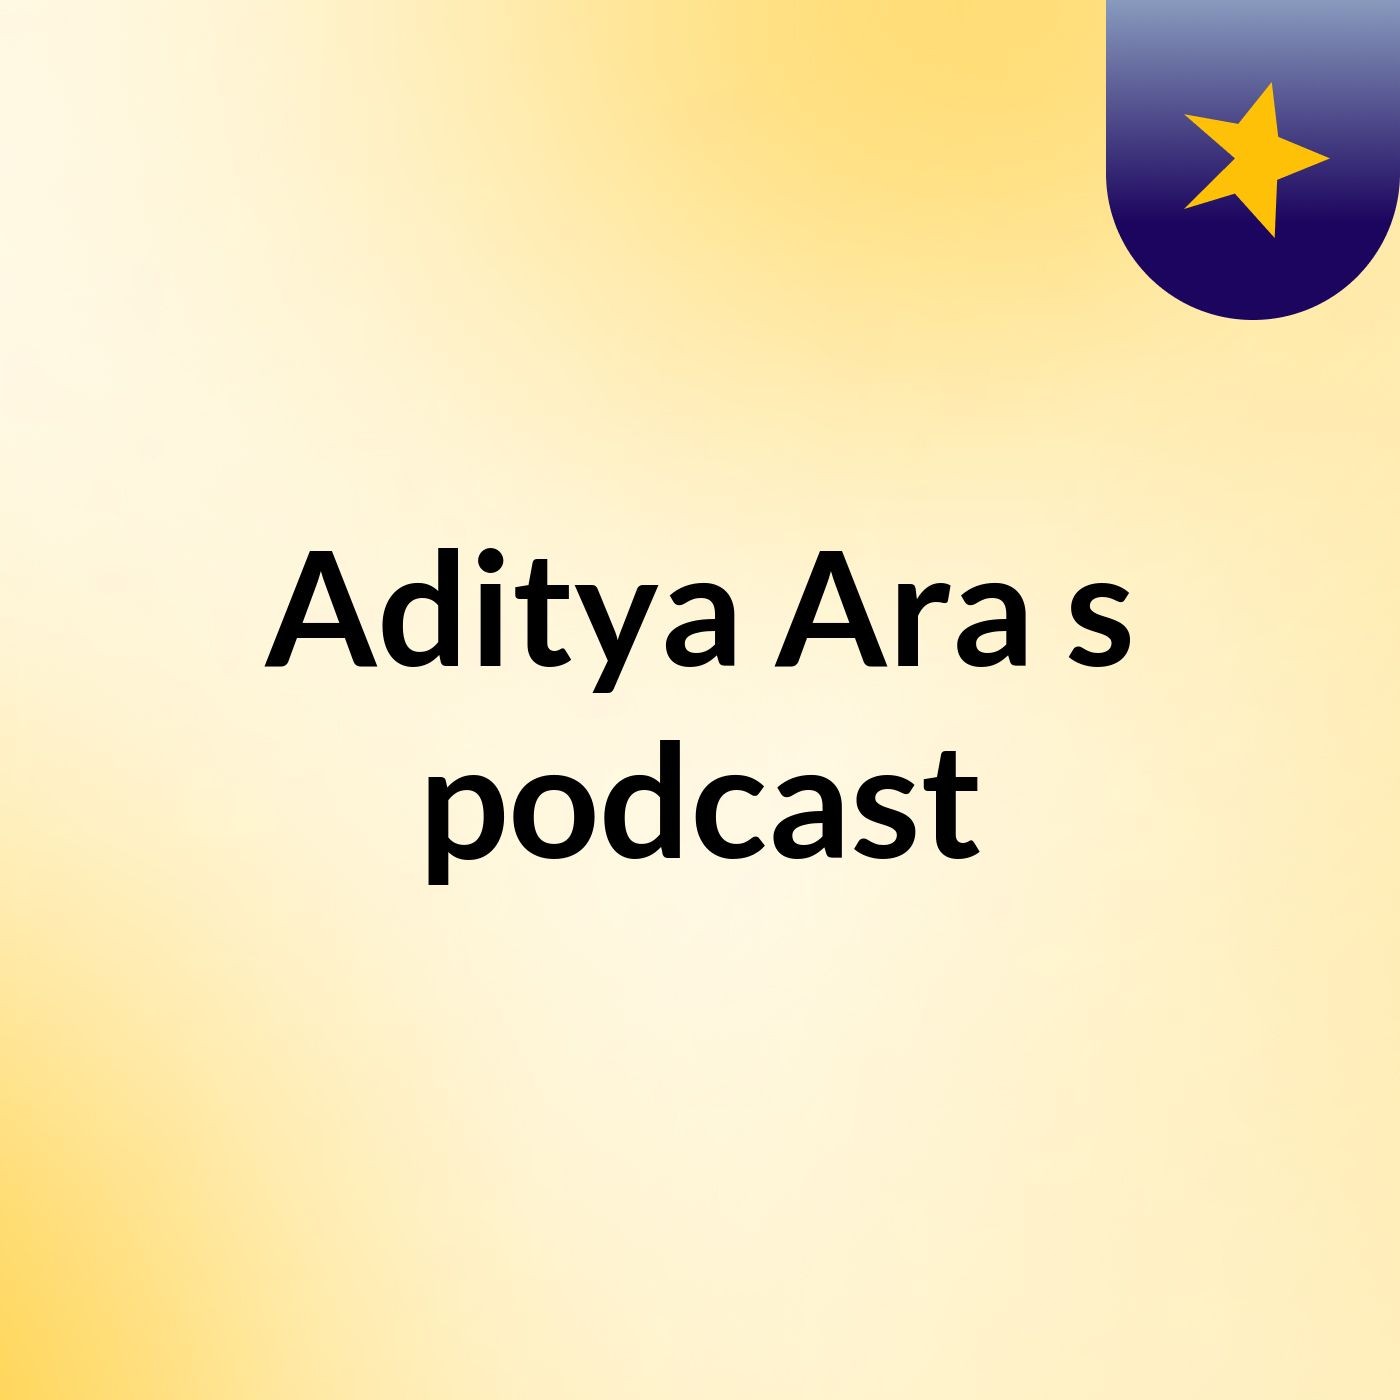 Aditya Ara's podcast